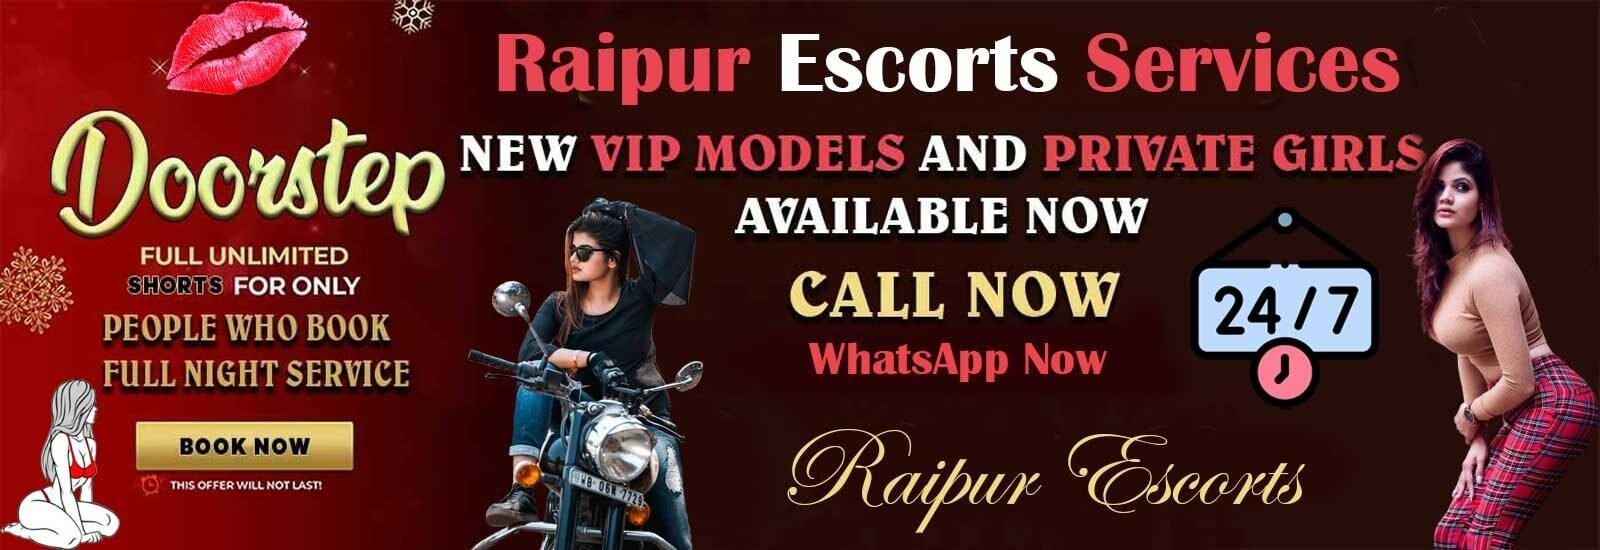 Raipur Escorts Service cover image